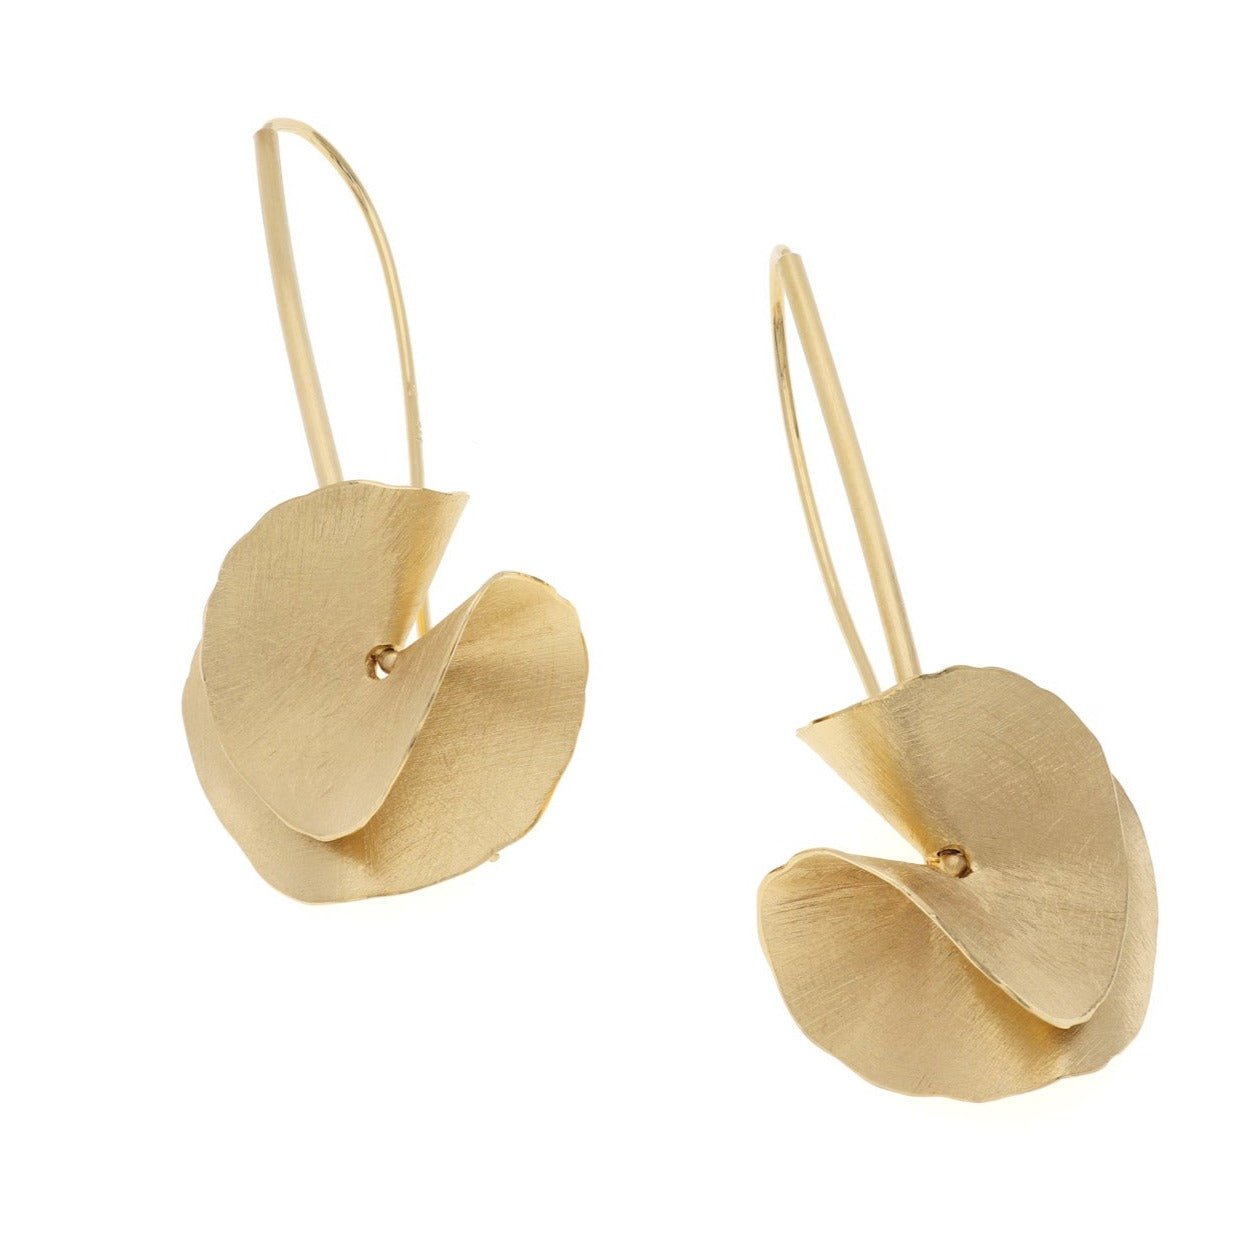 Gold Earrings - The Nancy Smillie Shop - Art, Jewellery & Designer Gifts Glasgow